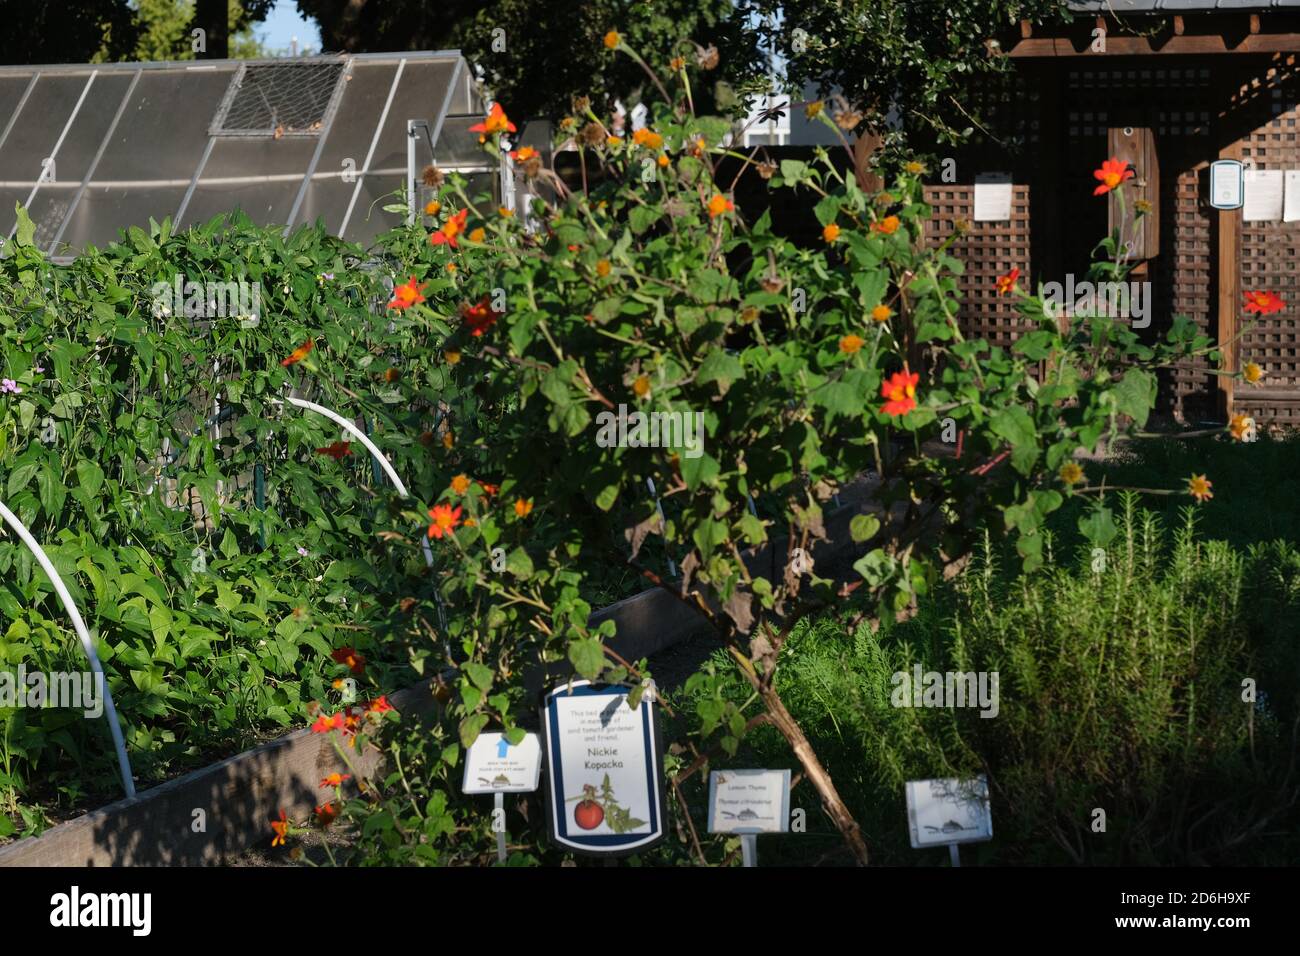 Urban Garden, Halloween, Fountain,, Construction, Huguenot Church, Cemetery, Pumpkin in Window, Pun with Vegetables. Stock Photo